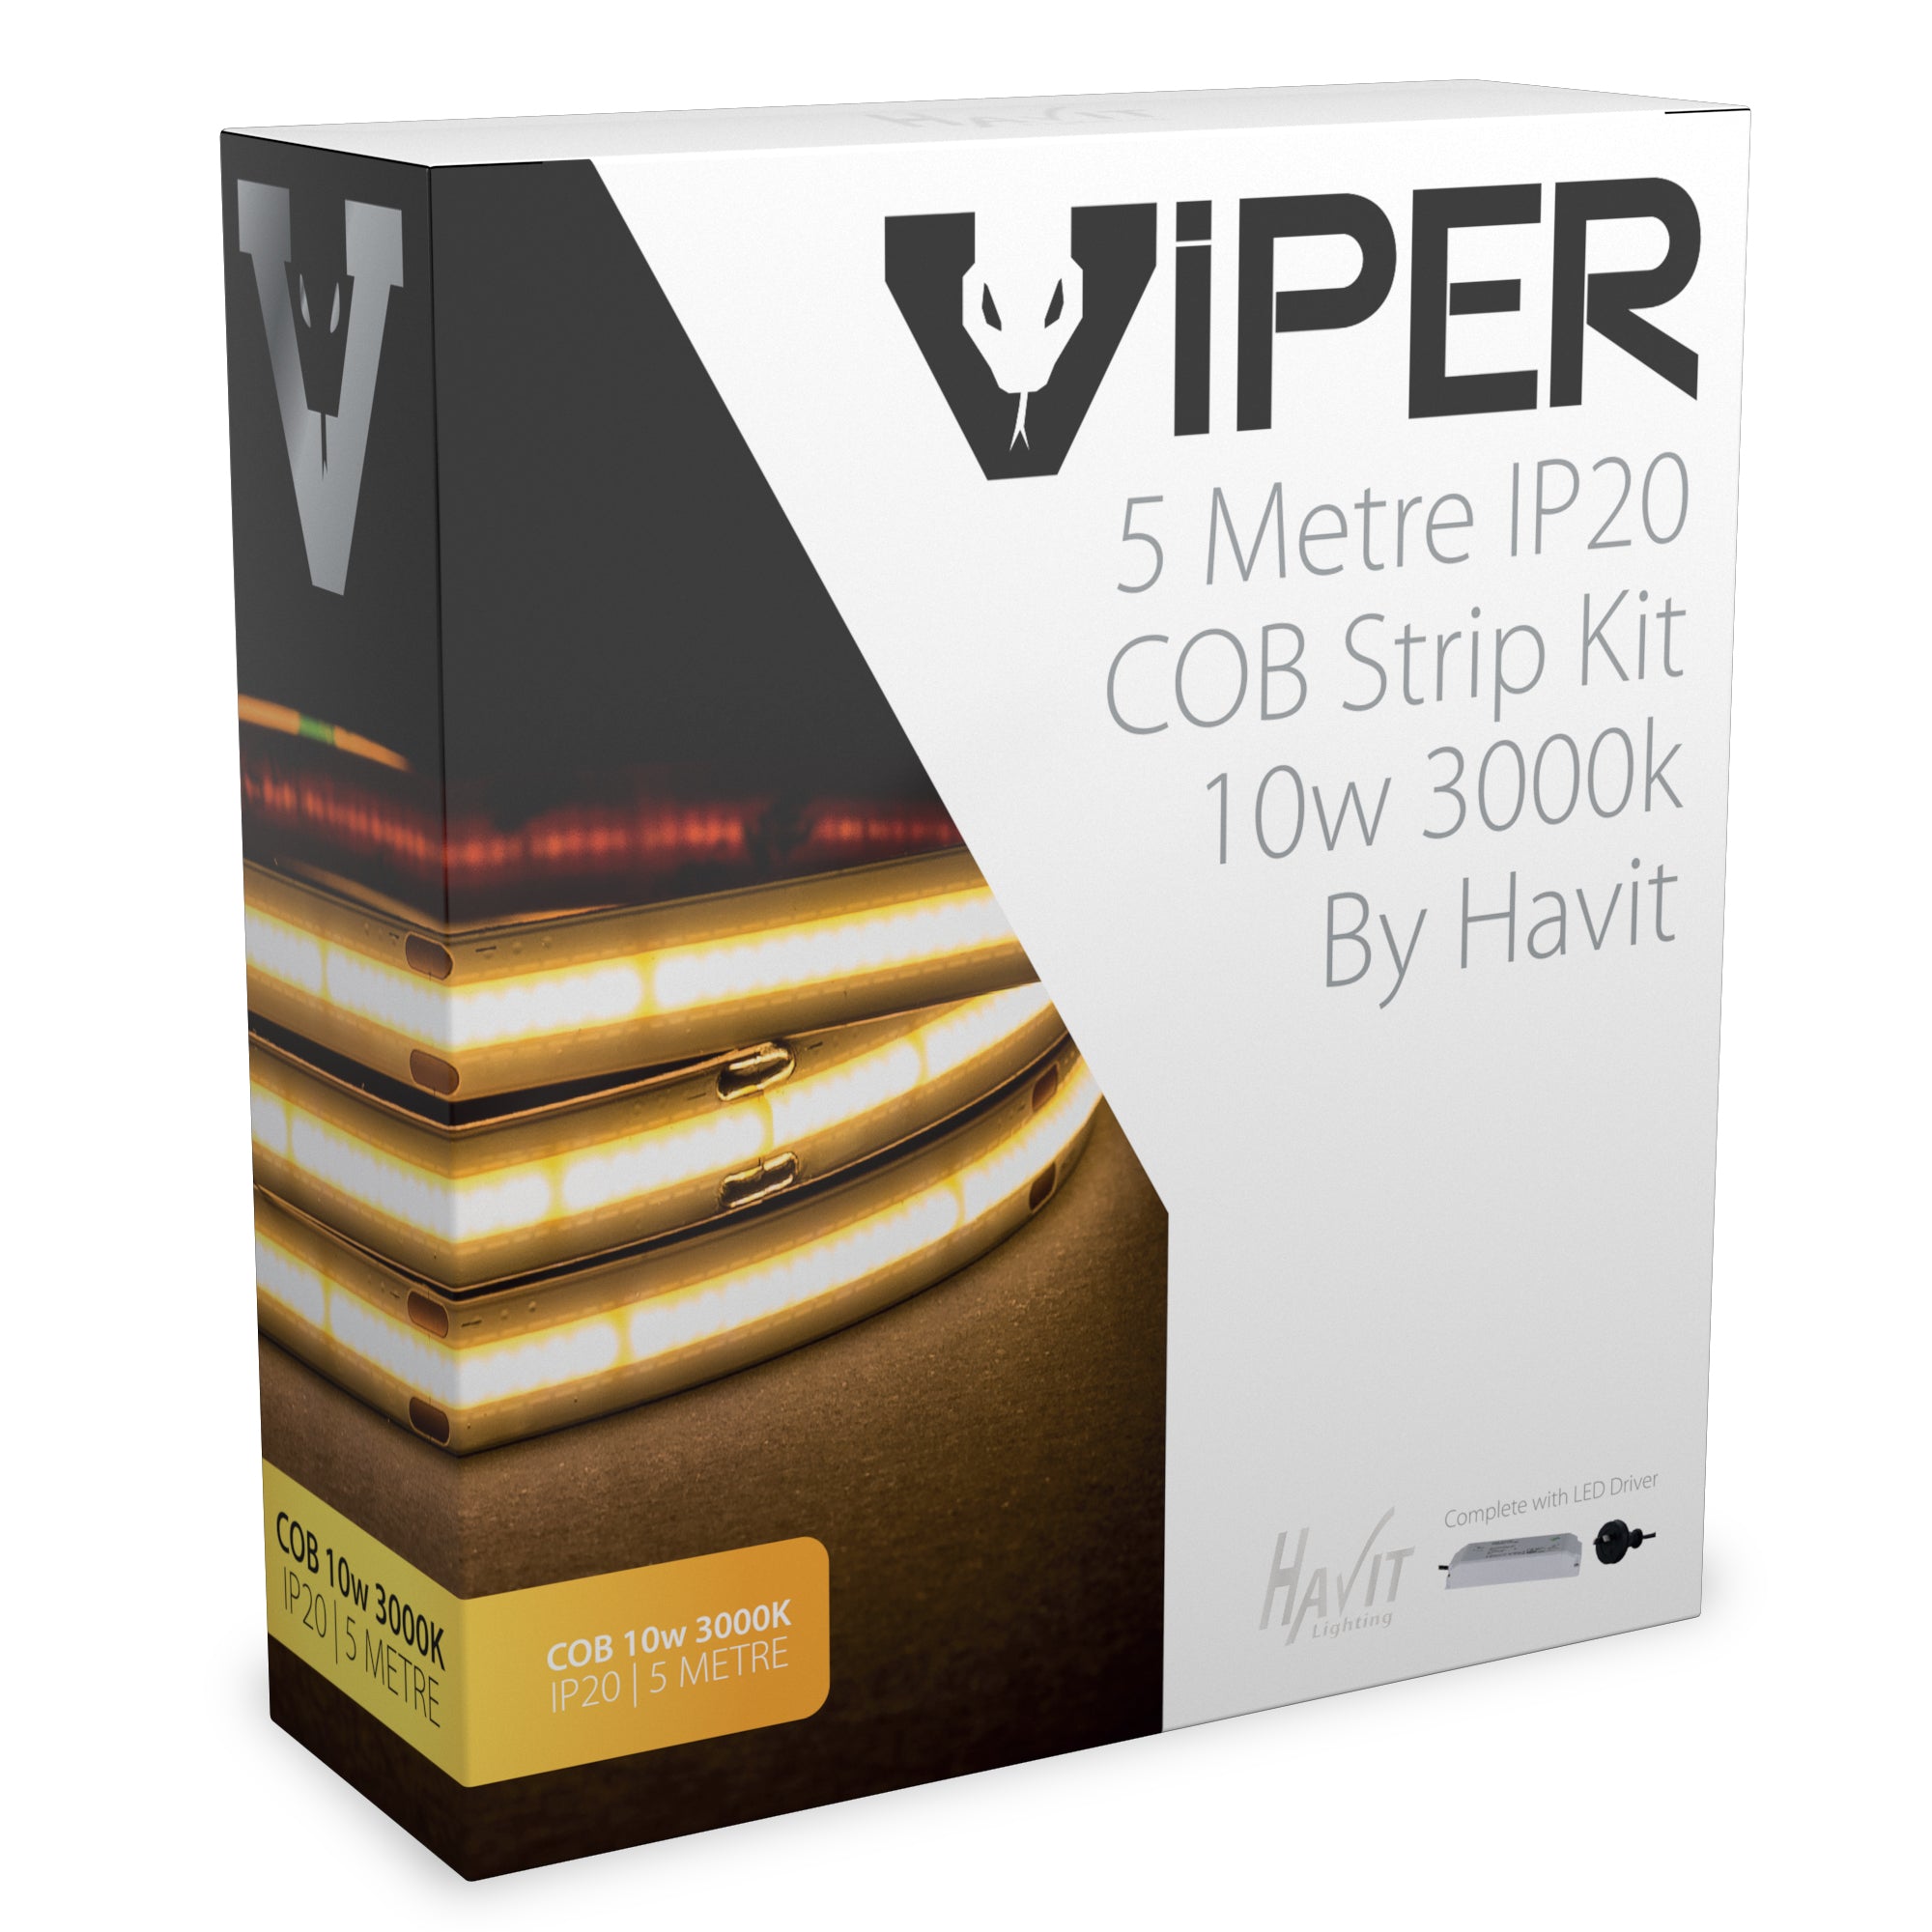 VPR9763IP20-512-5M - COB VIPER 10w 5m LED Strip kit 3000k